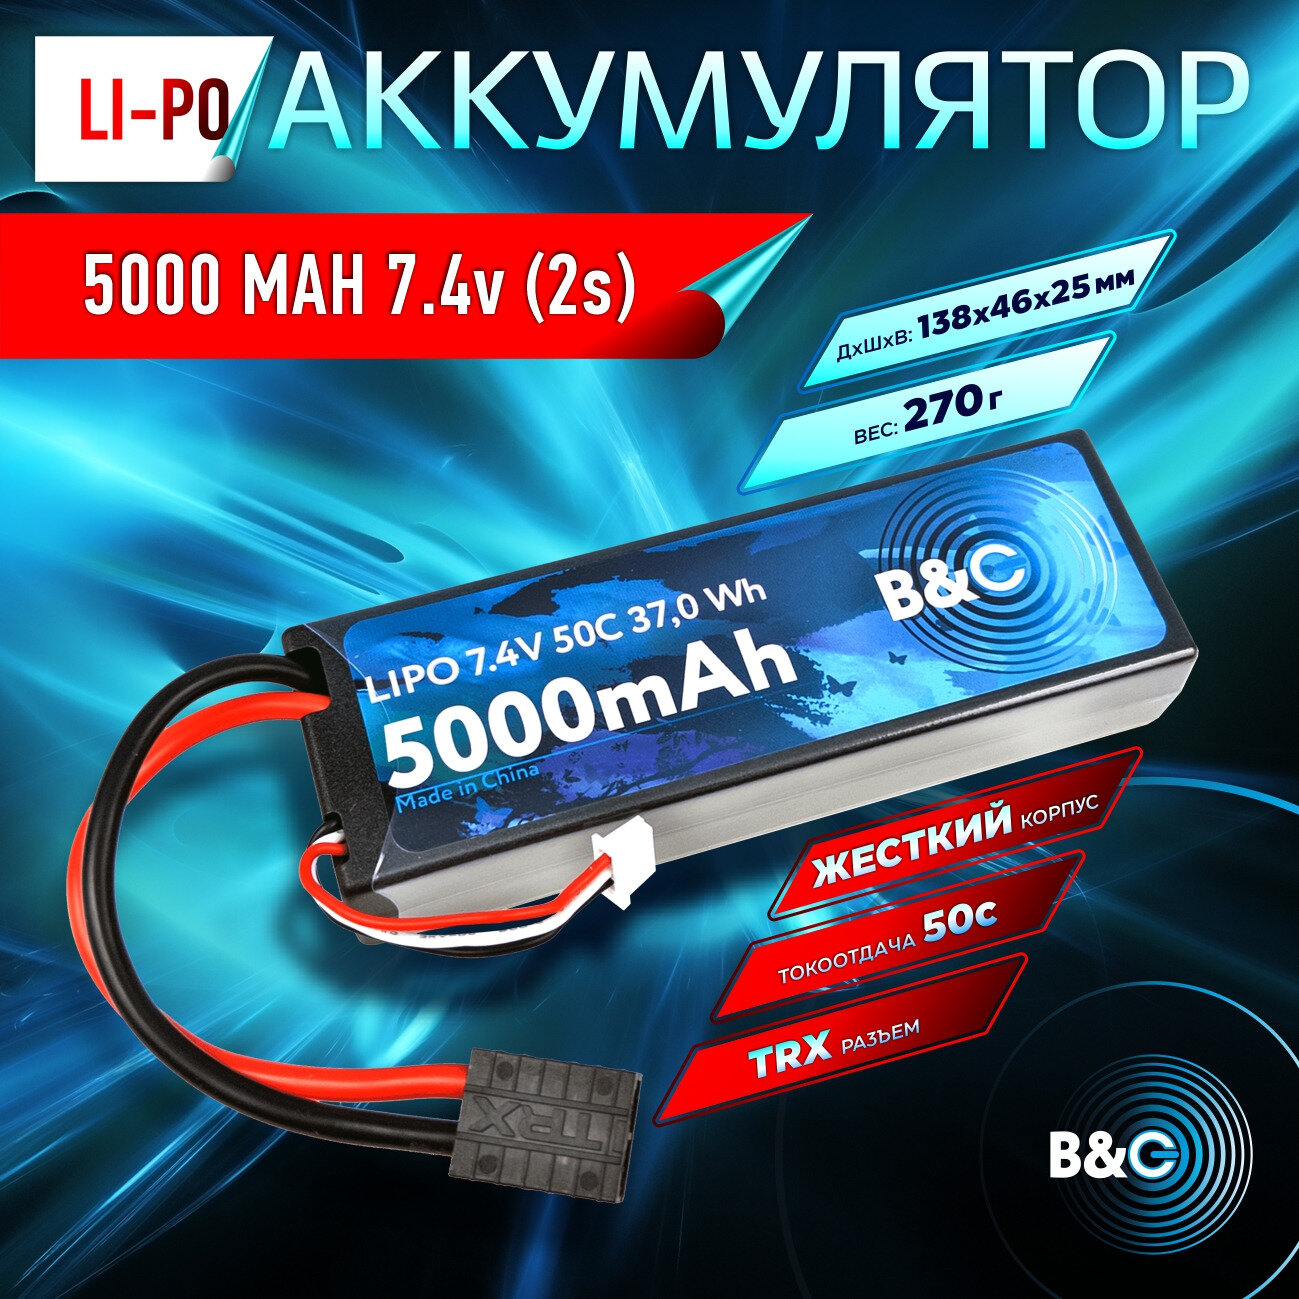 Аккумулятор Li-po B&C 5000 MAH 7.4v (2s), 50C, TRX, Hard case